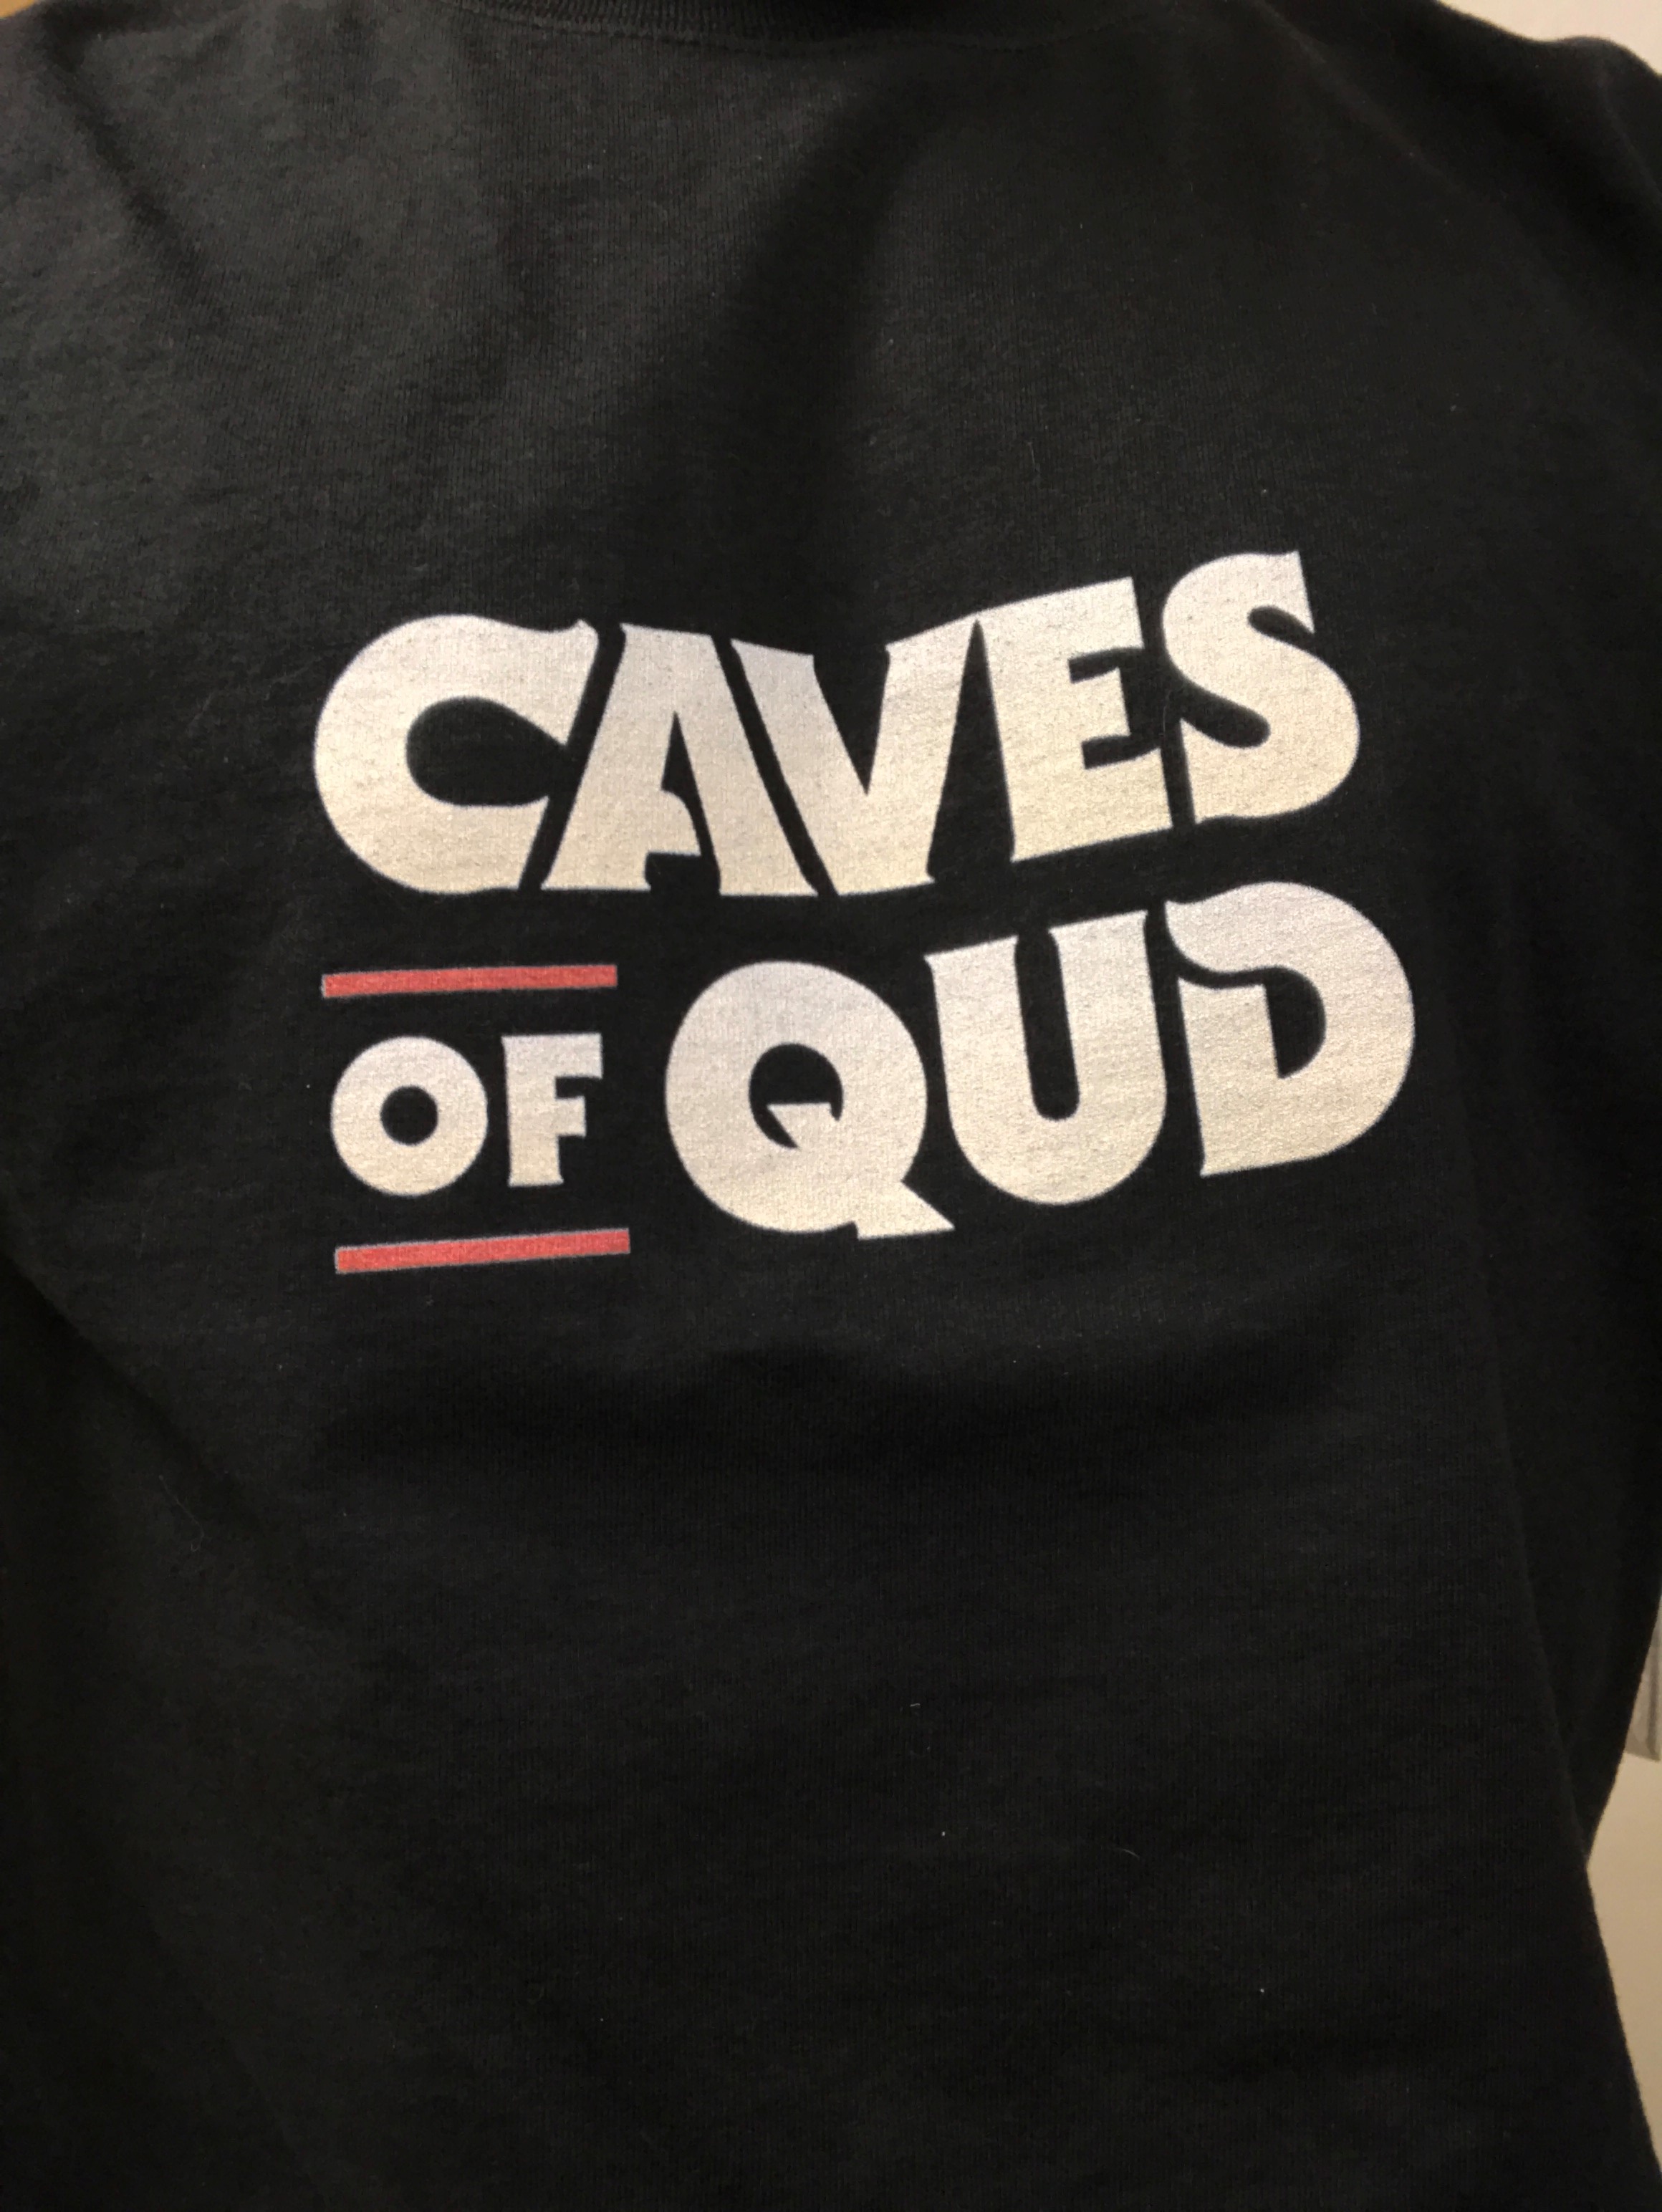 caves of qud unarmed